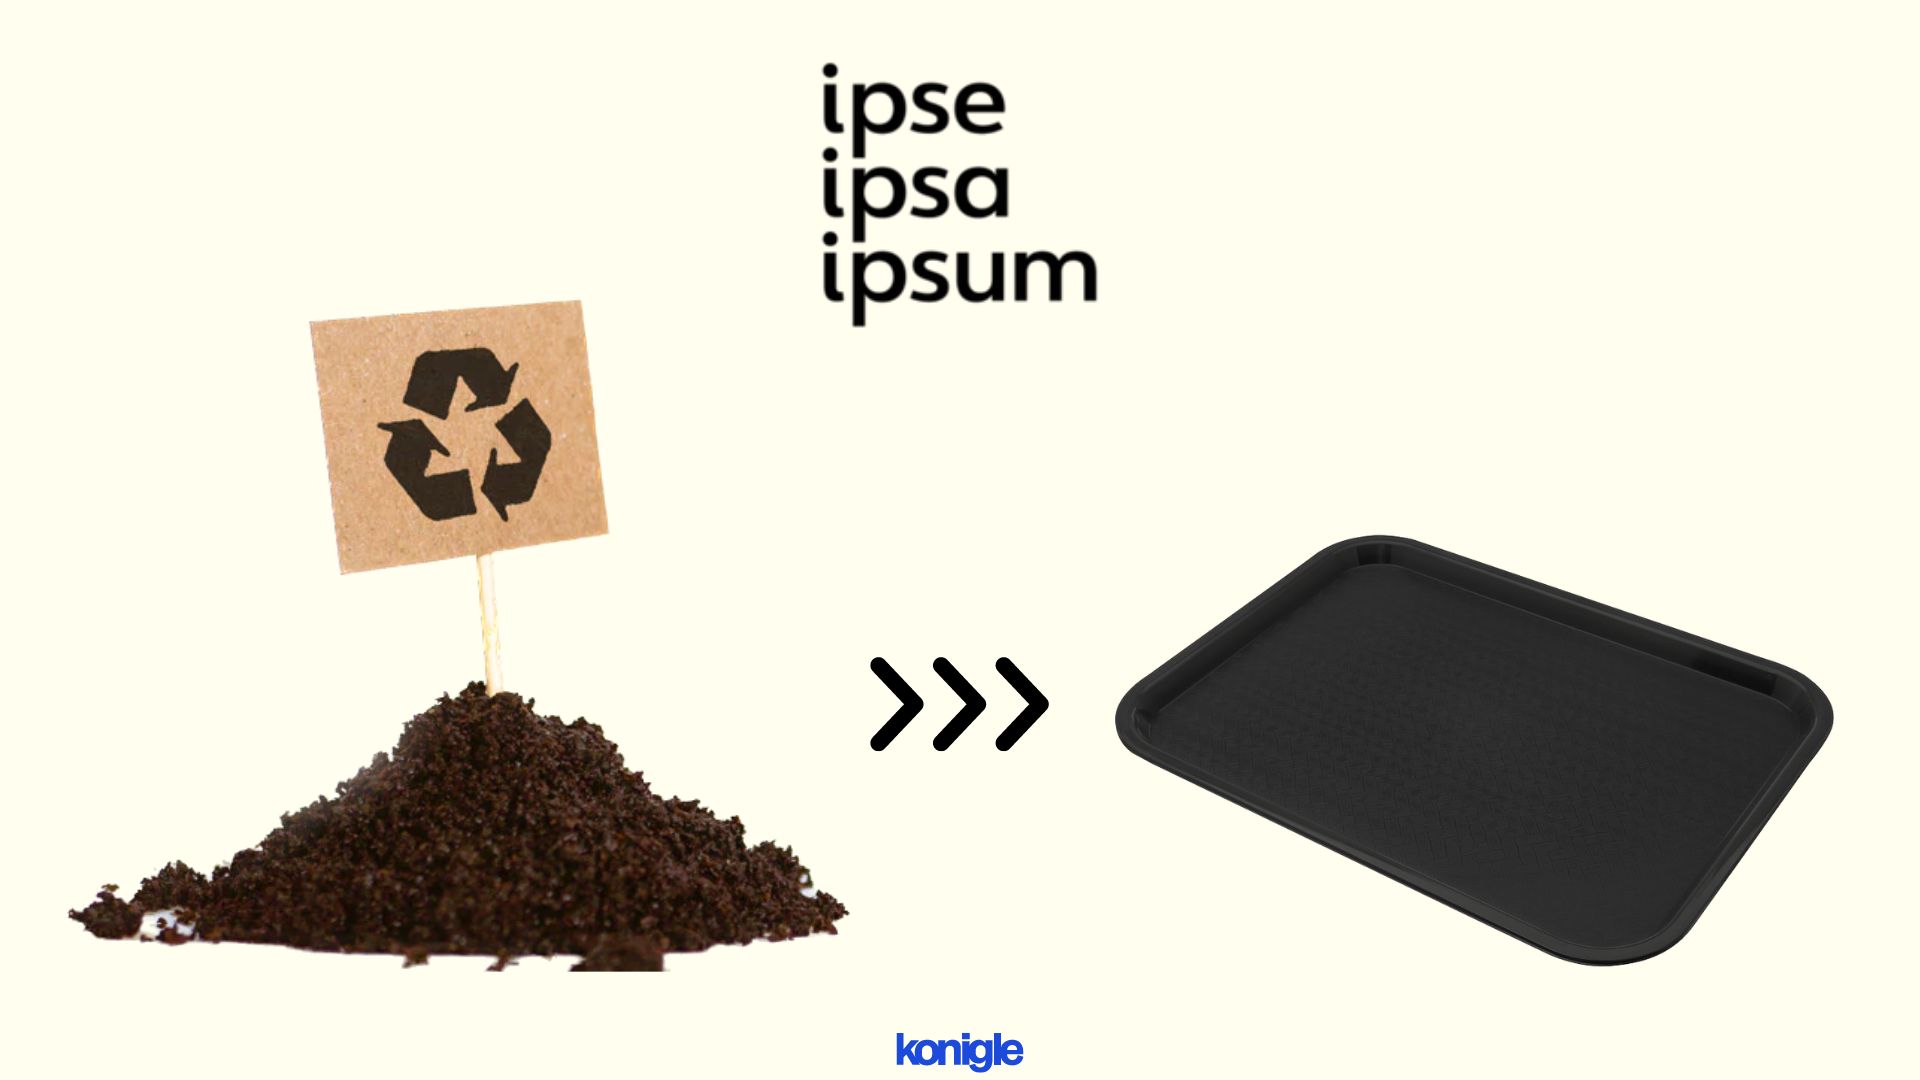 How ipse ipsa ipsum is turning coffee waste to kitchen products